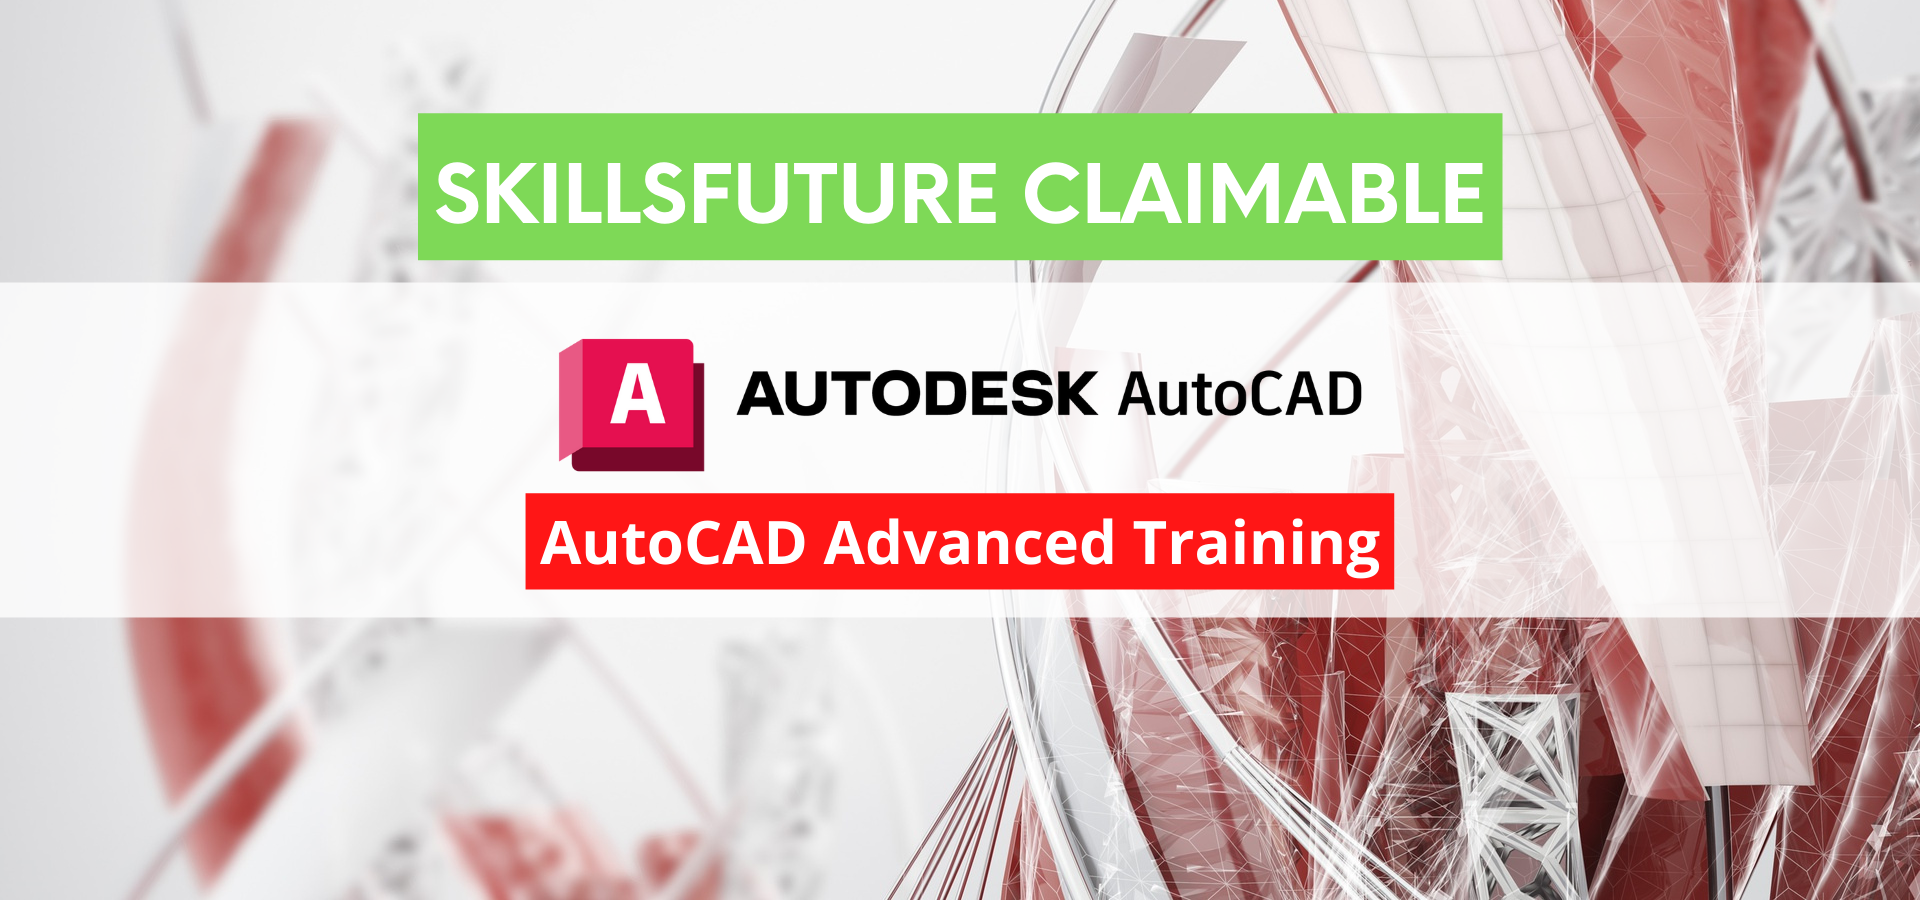 AutoCAD Advanced Training